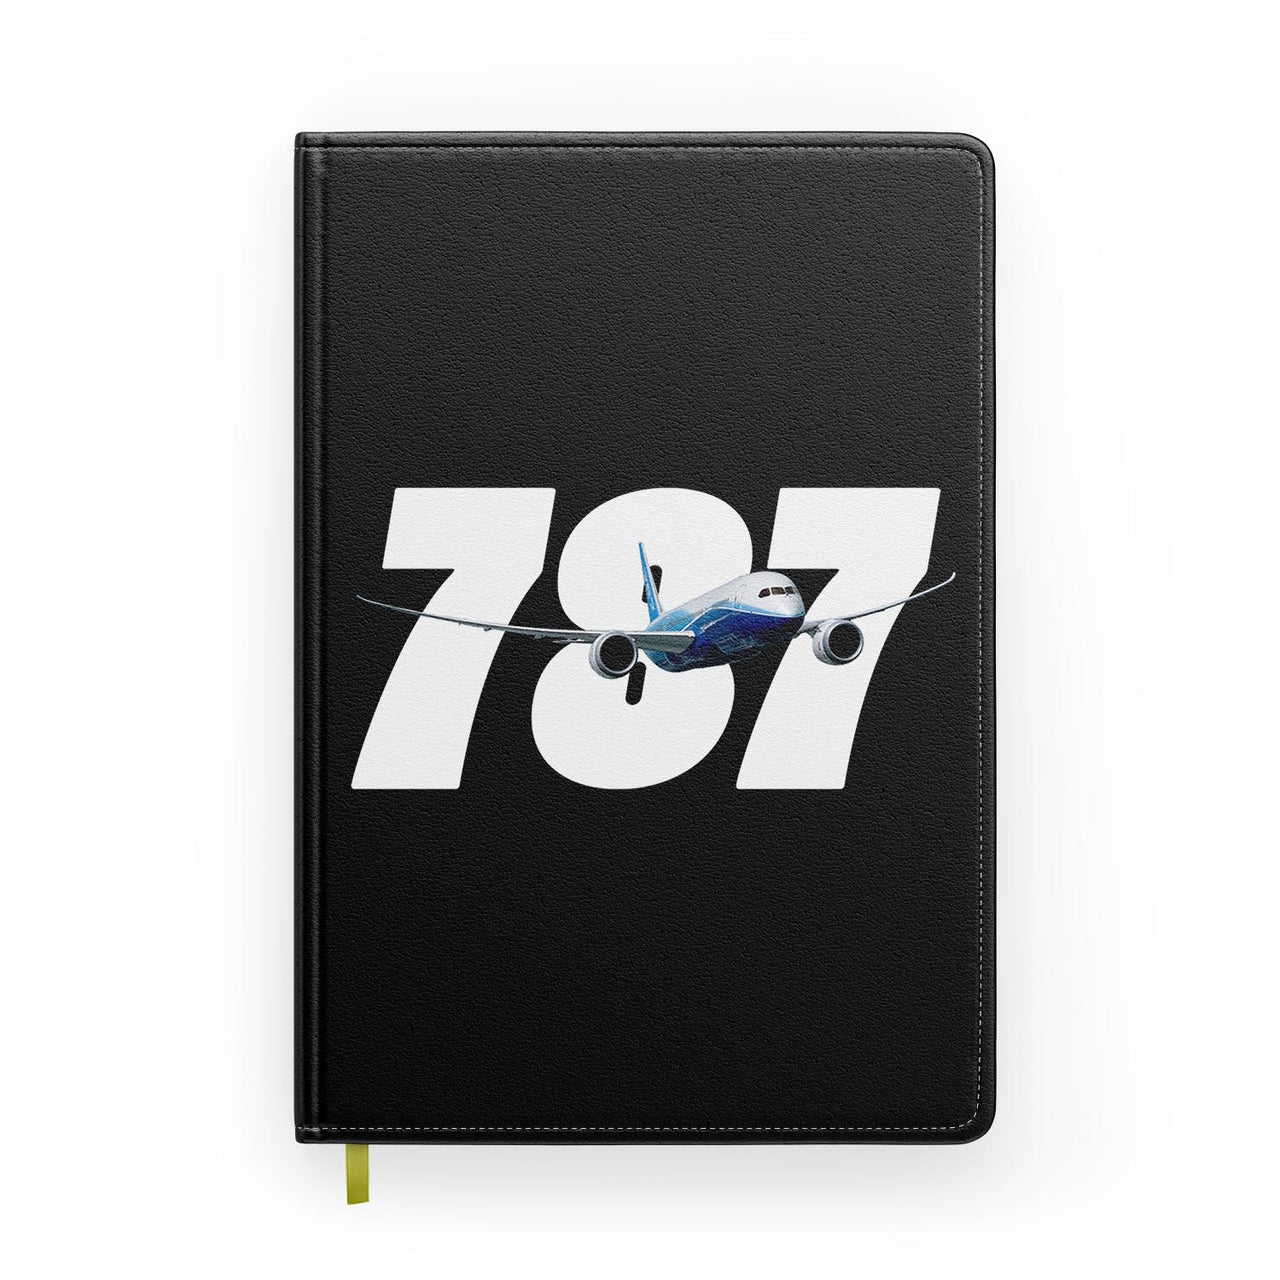 Super Boeing 787 Designed Notebooks